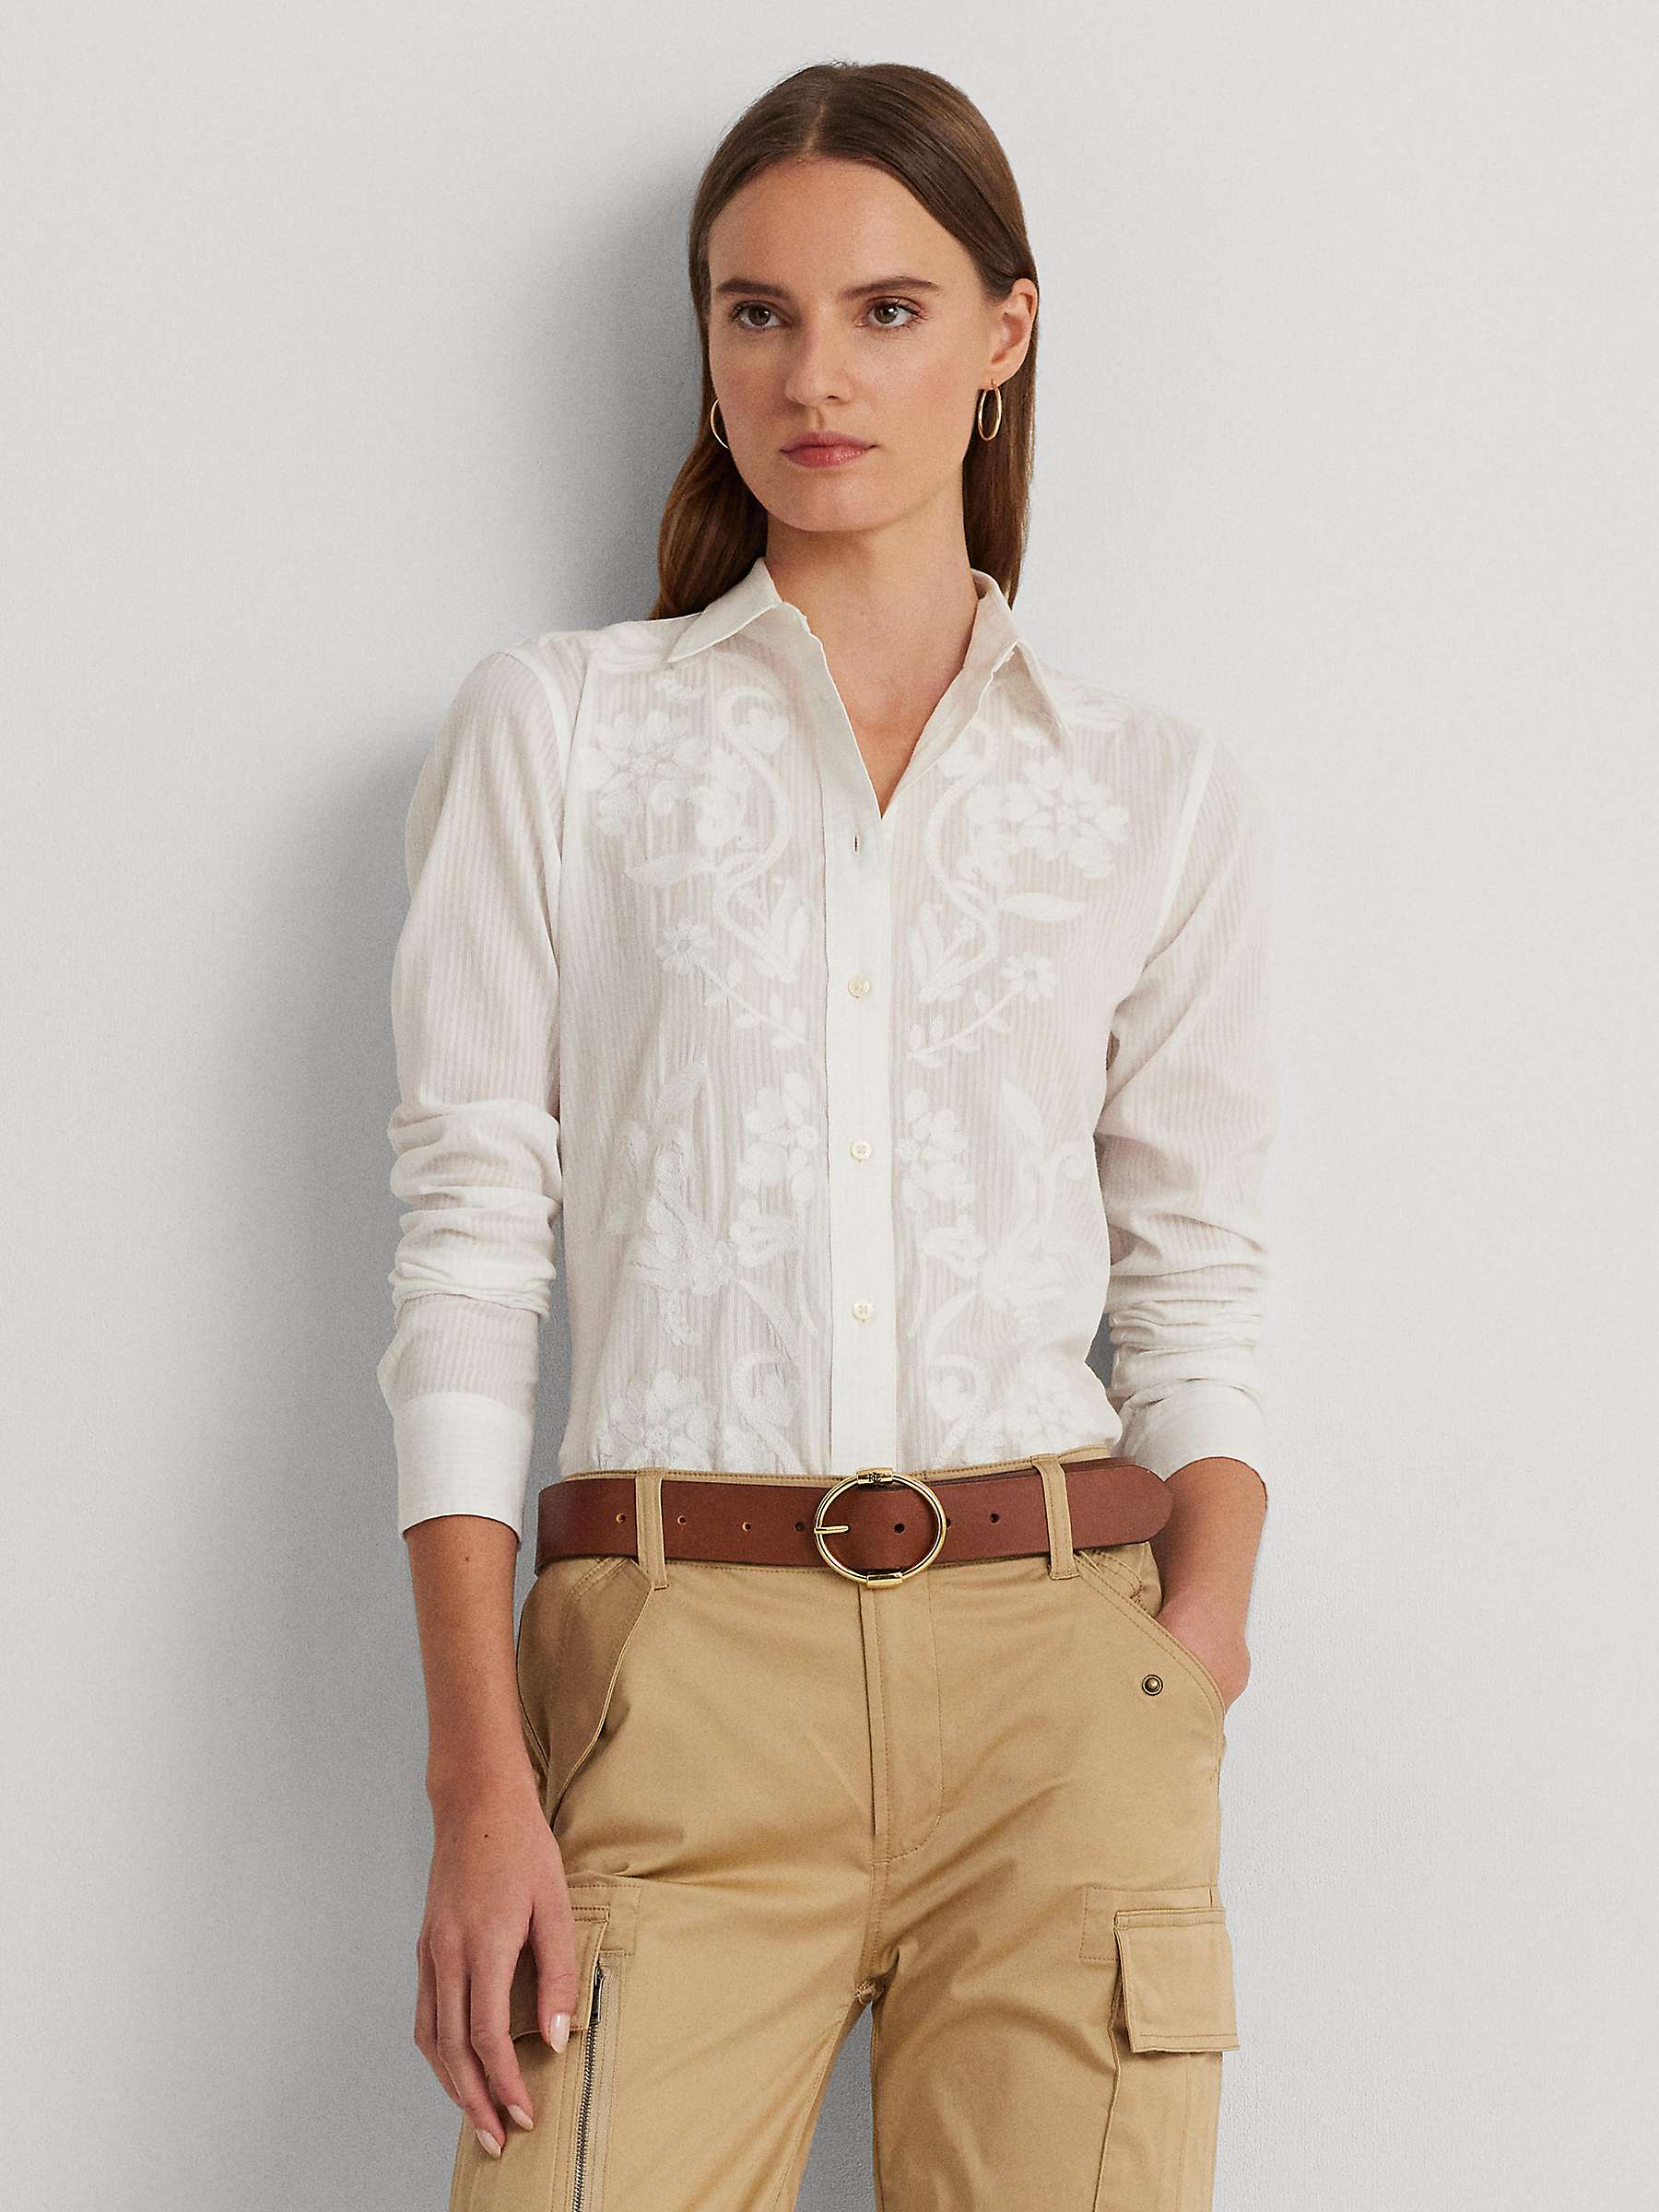 Buy Lauren Ralph Lauren Haitalle Embroidered Shadow Stripe Cotton Shirt, White Online at johnlewis.com